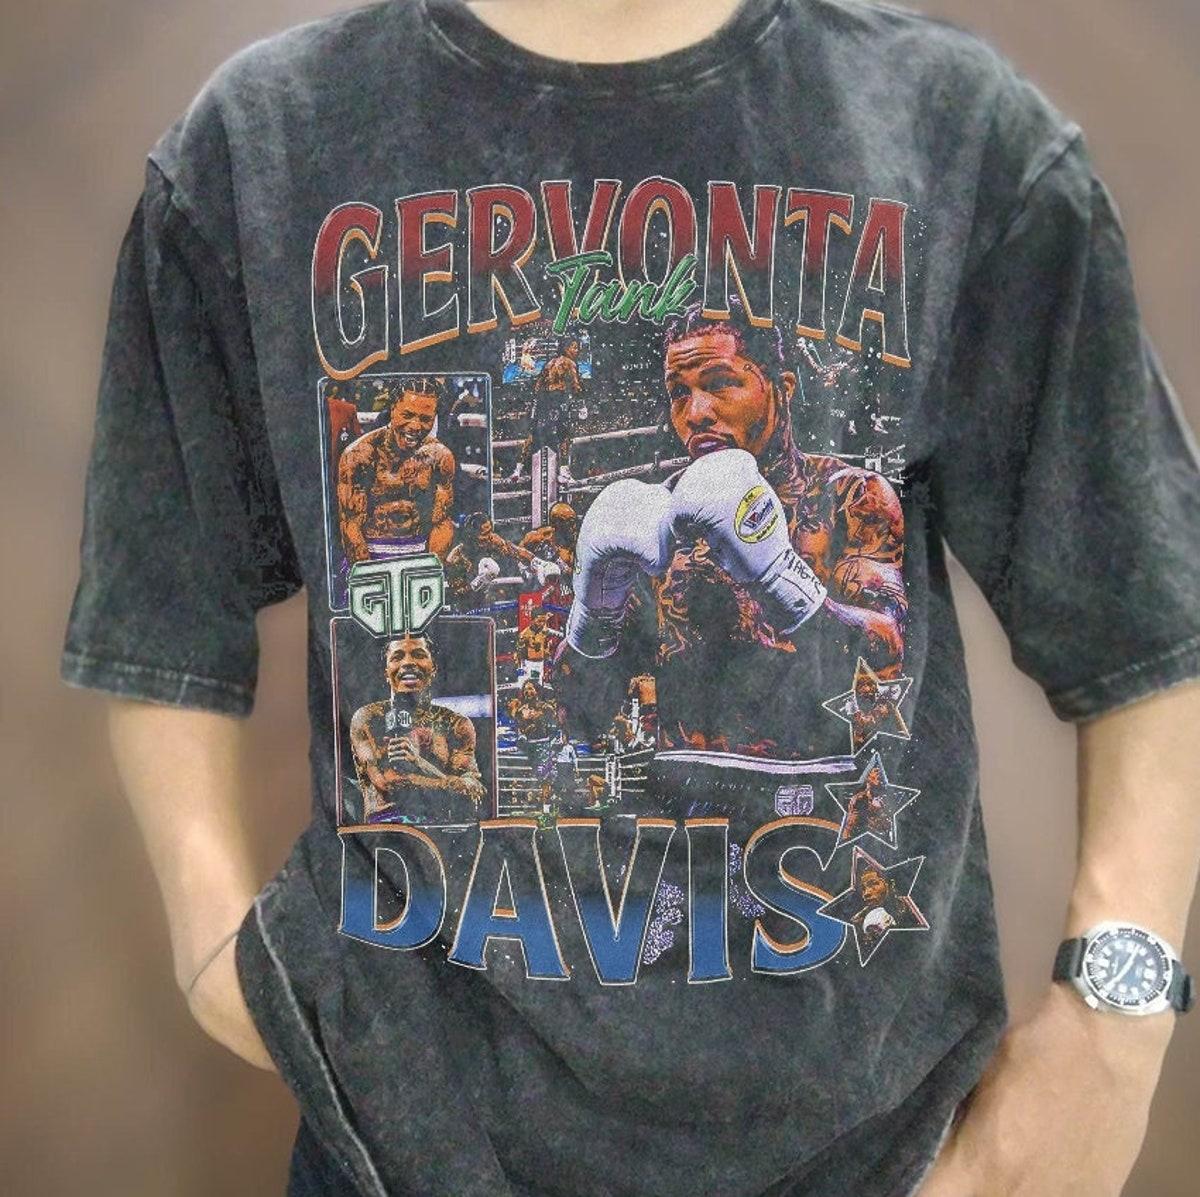 Gervonta Davis Boxing Graphic T-shirt For Sports Fans - Apparel, Mug, Home Decor - Perfect Gift For Everyone